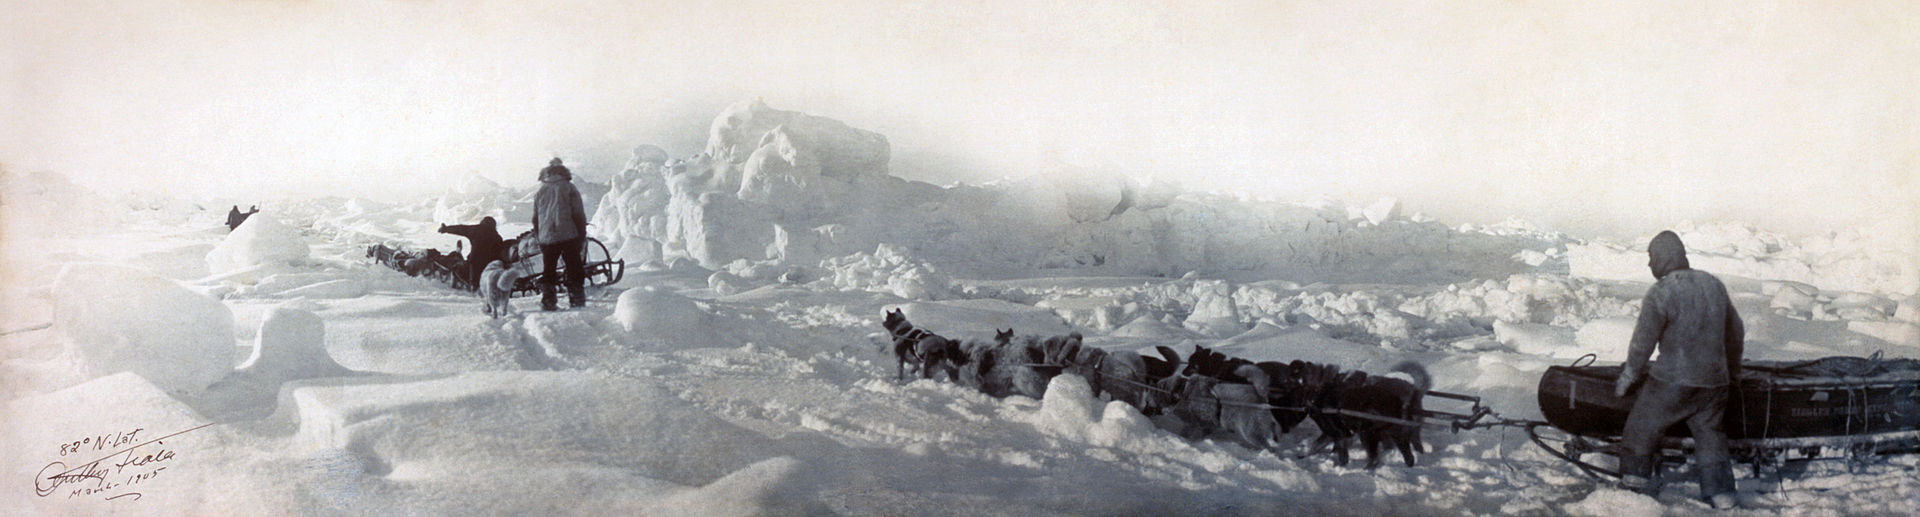 Zieglerova polární expedice, 1905